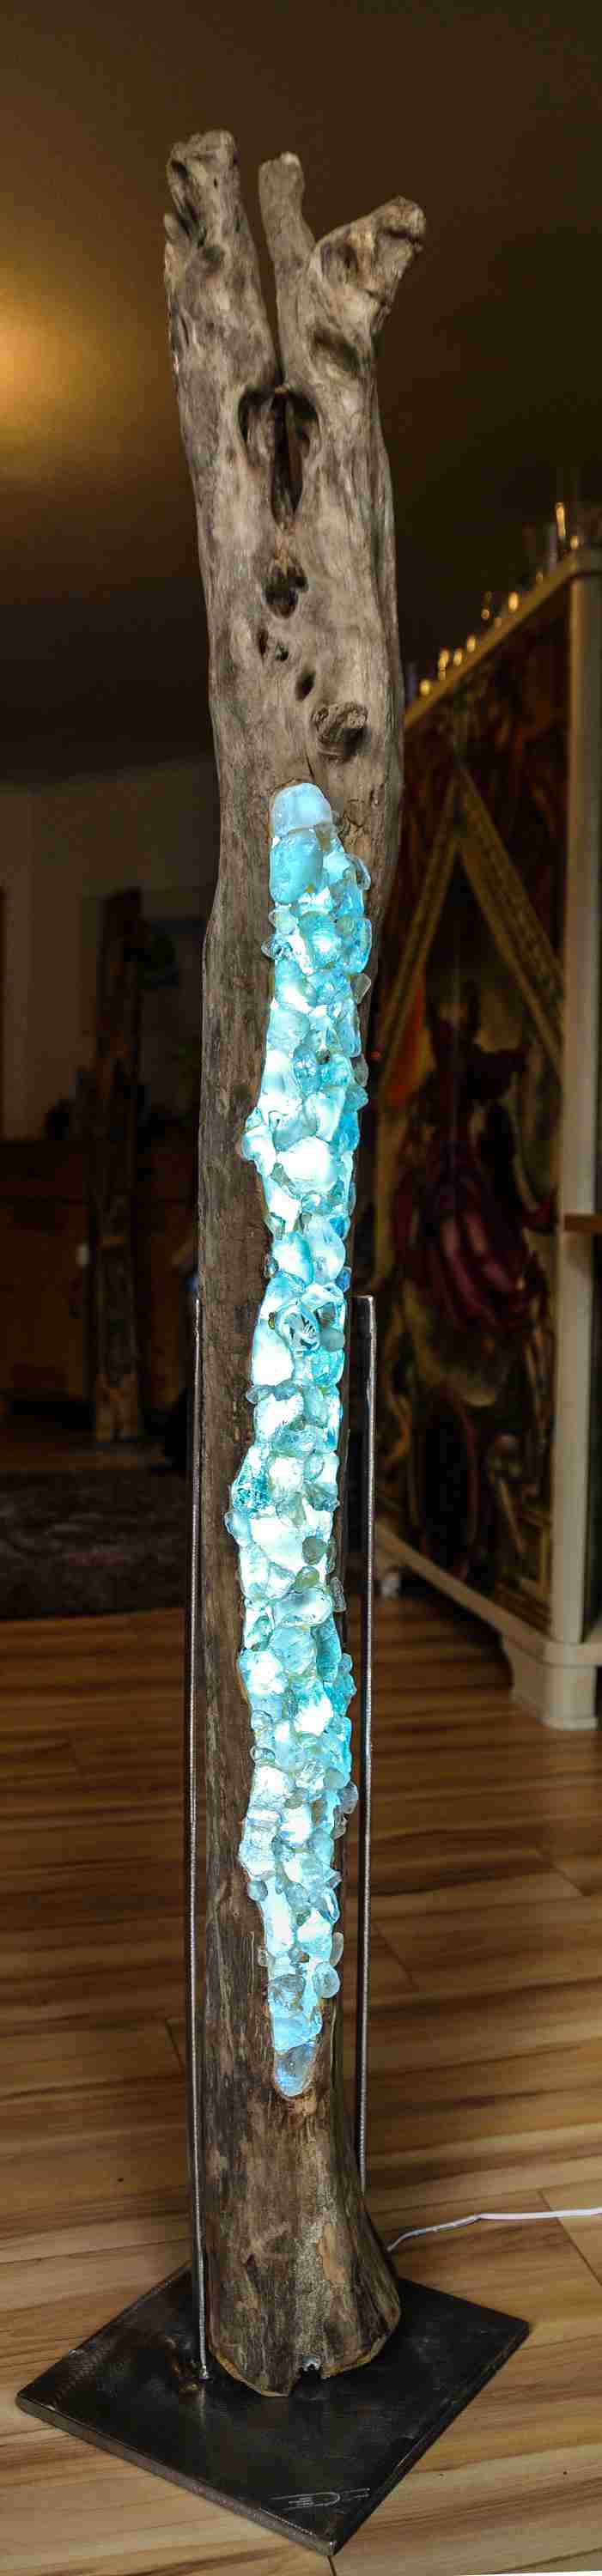 PW27 Treibholz Stehlampe Inneres Glühen 1